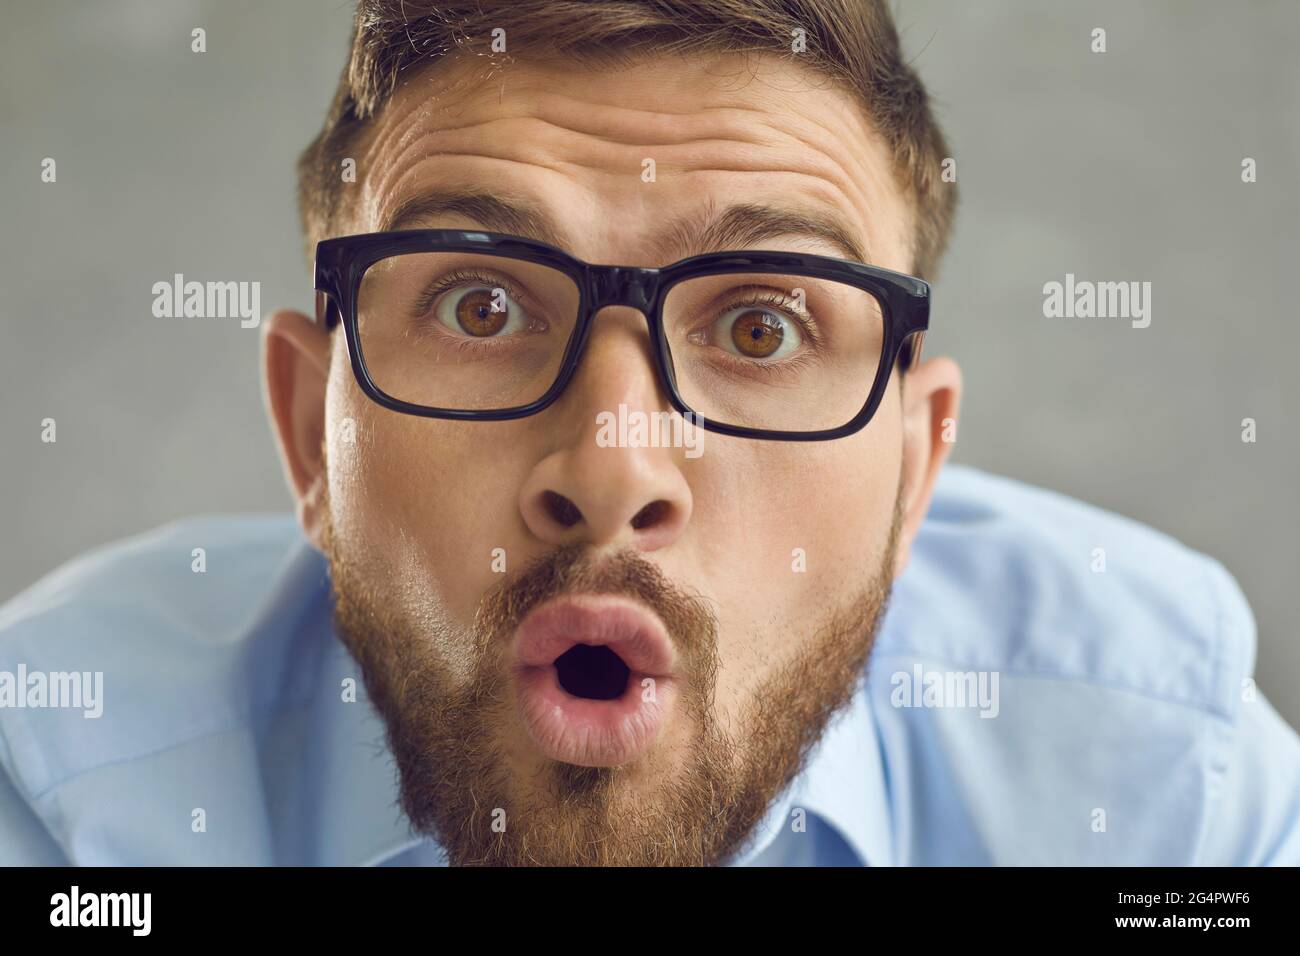 Closeup shocked funny male face portrait studio shot over grey background Stock Photo